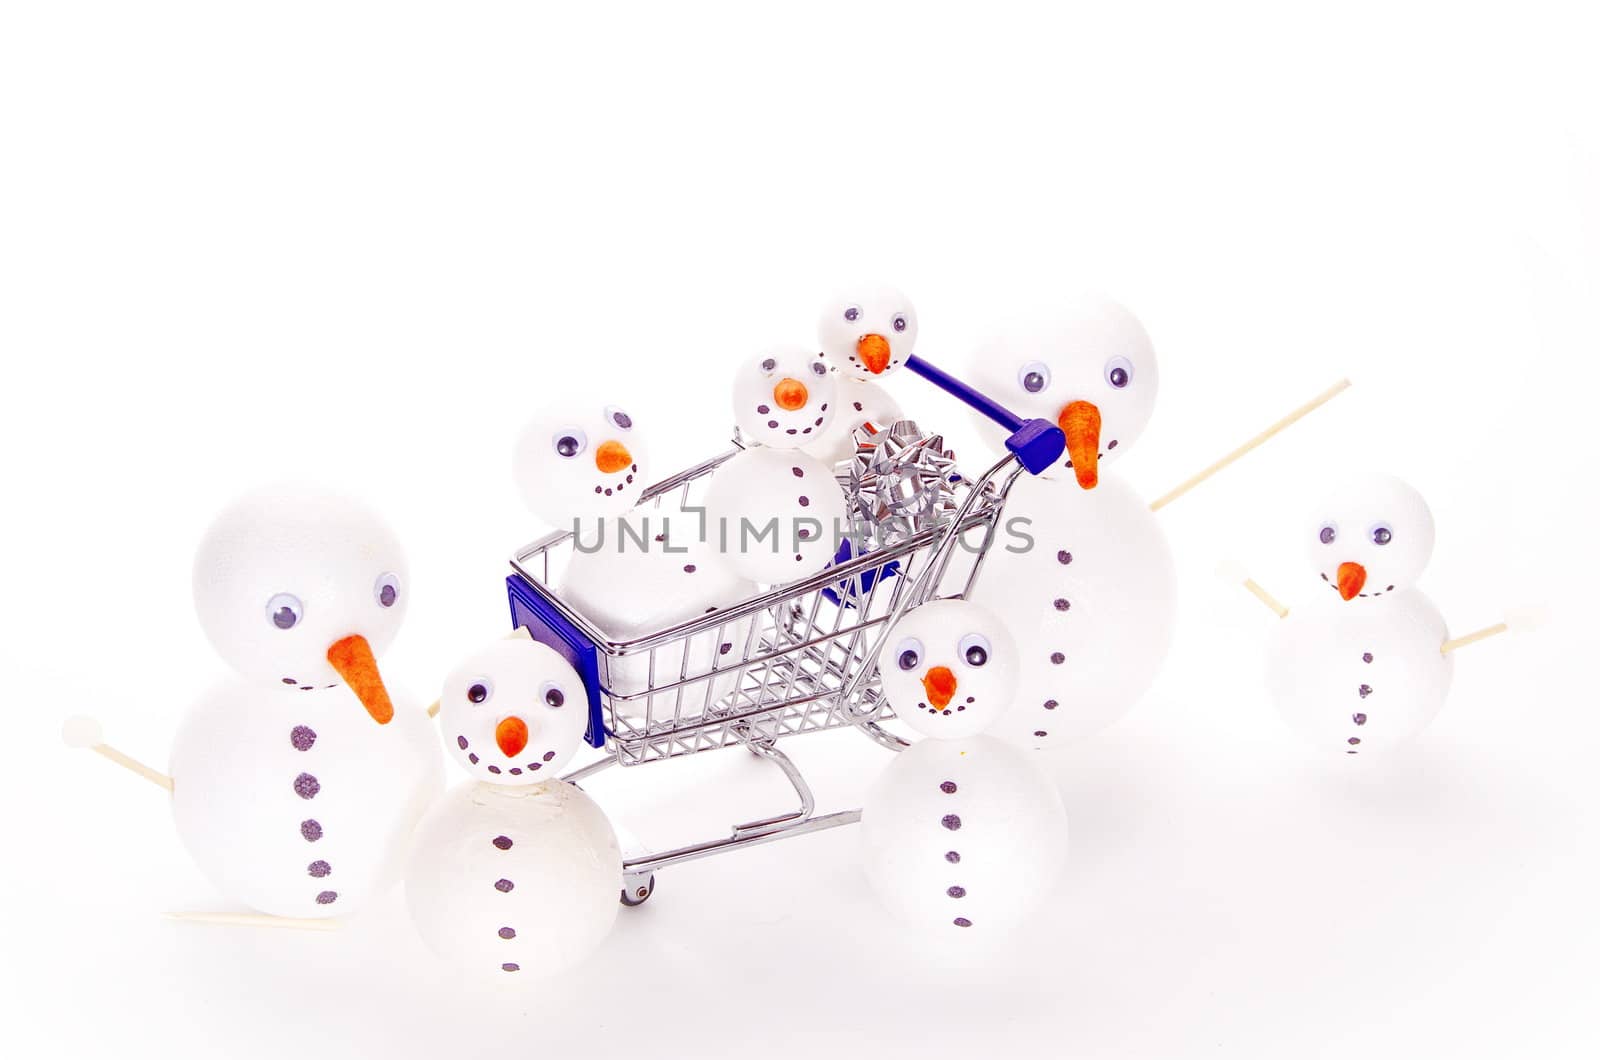 snowman shopping cart by yucas